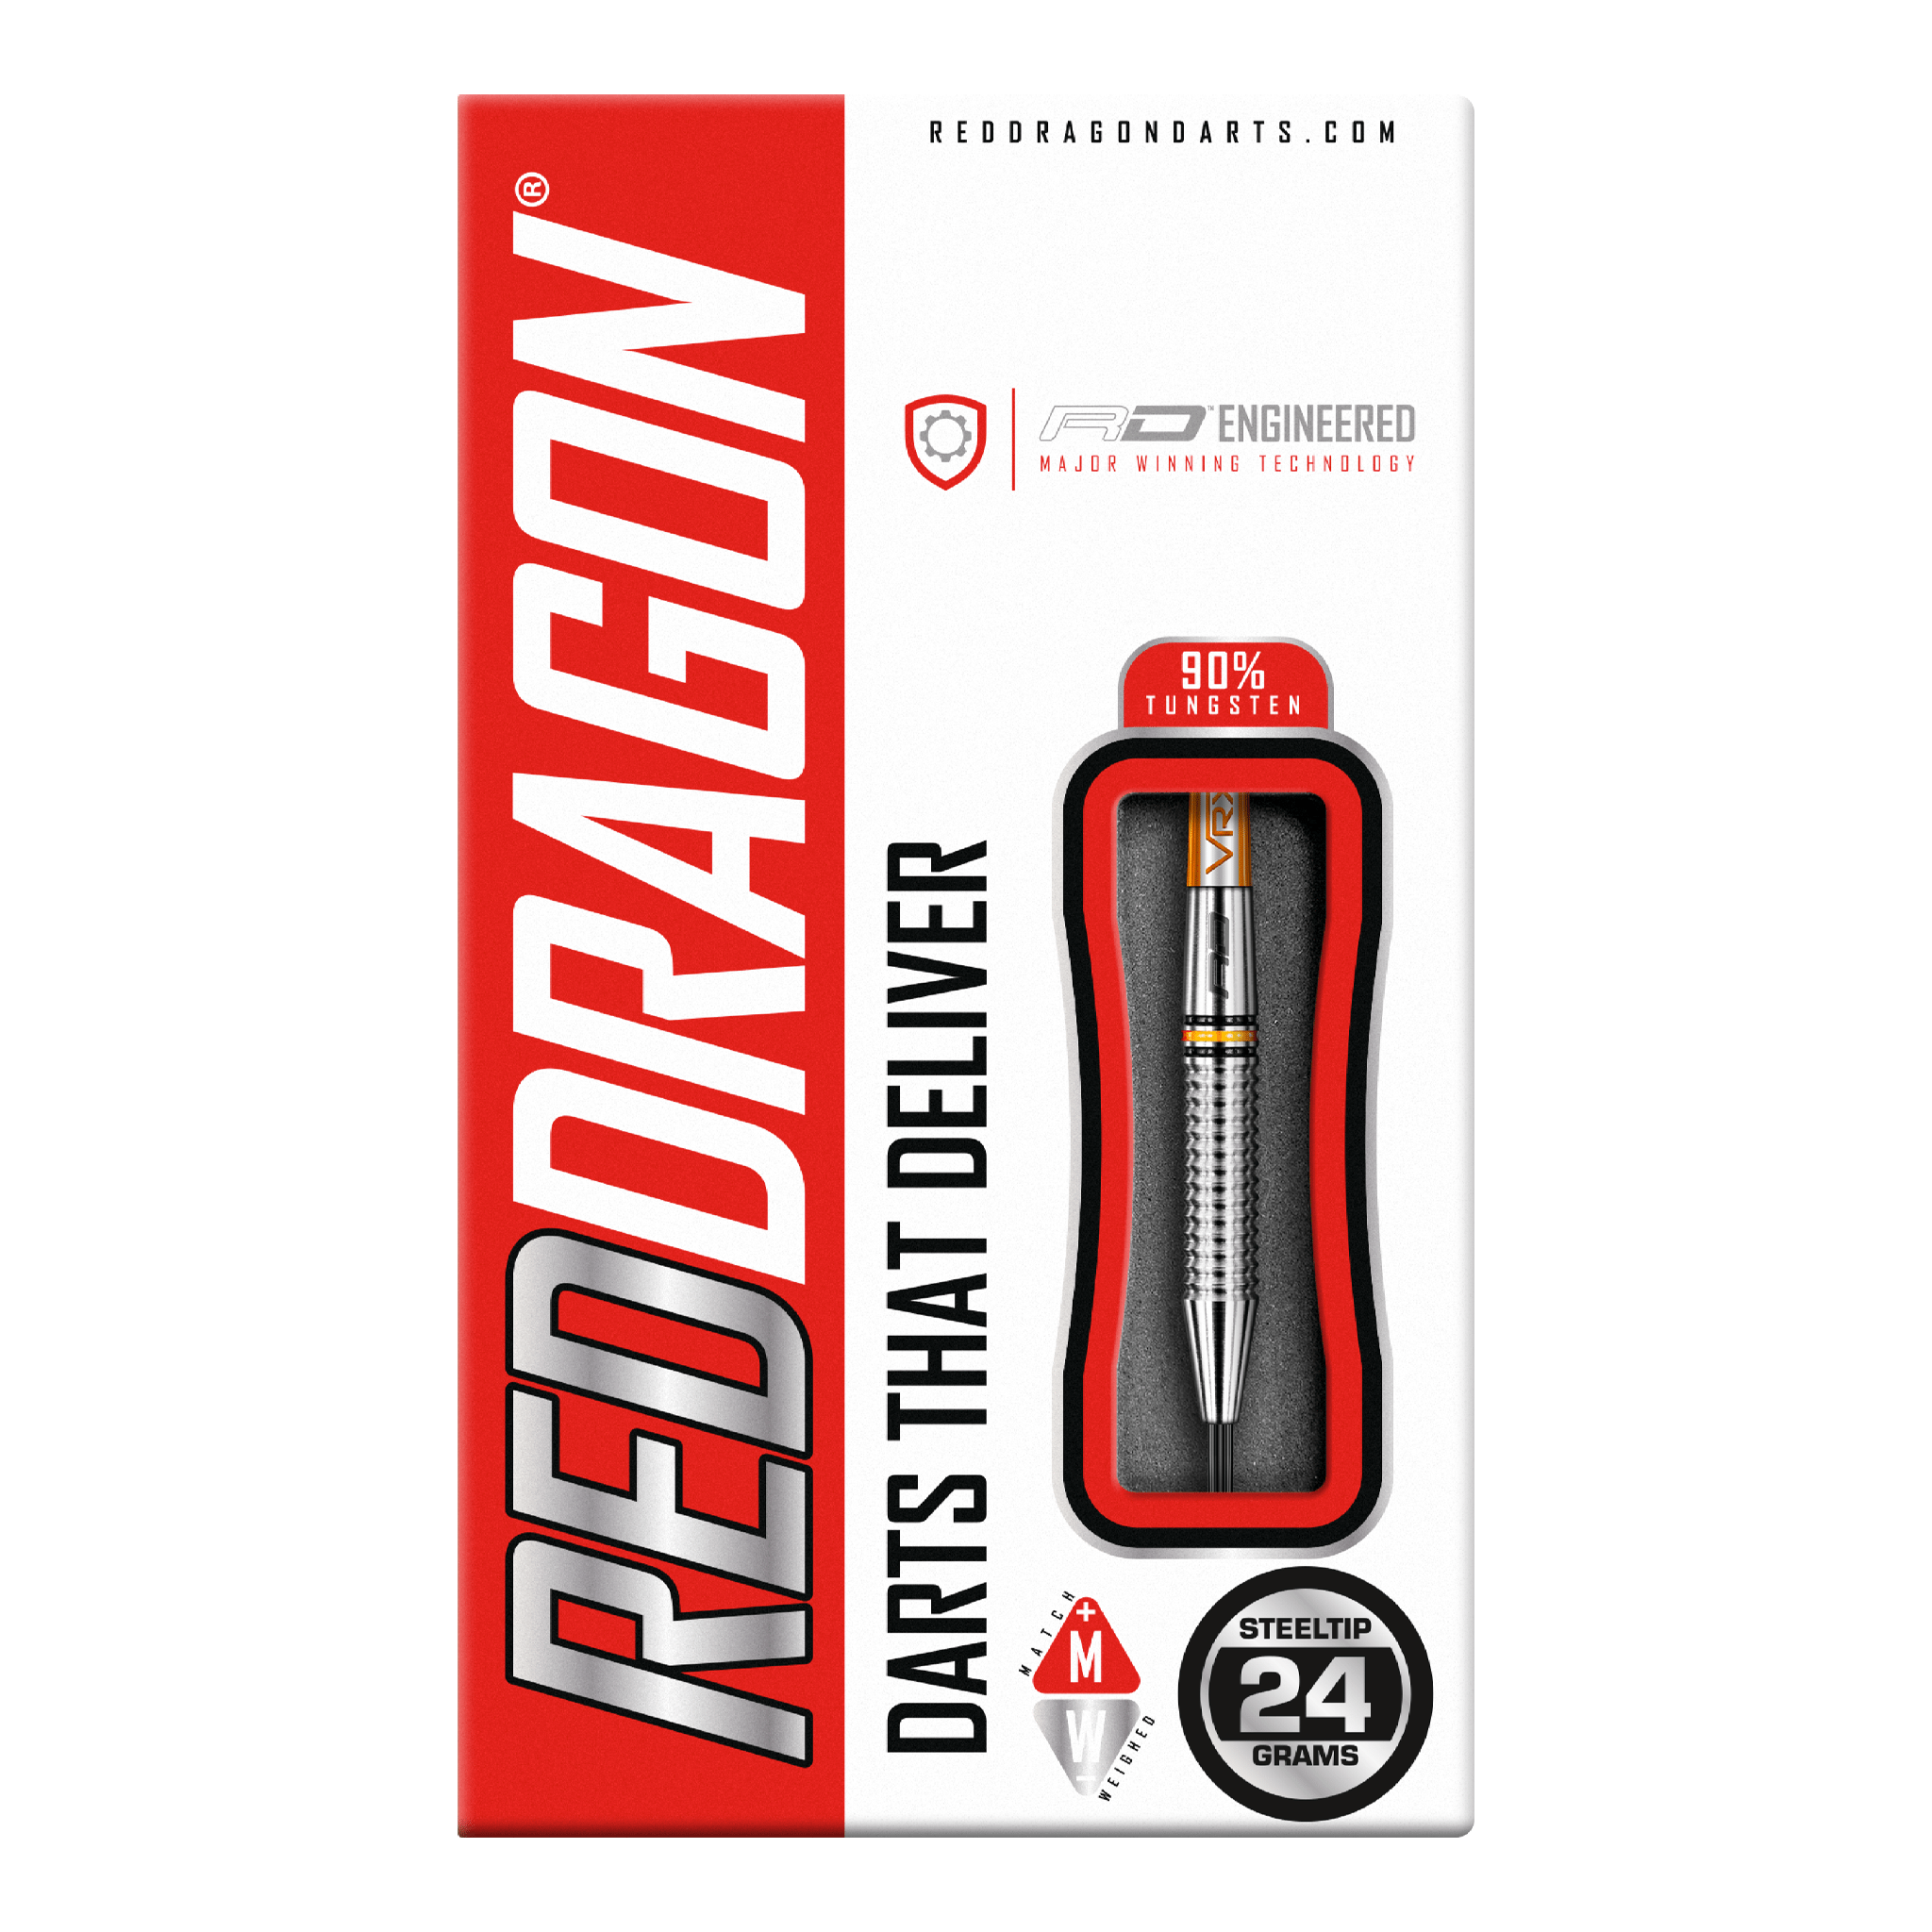 Red Dragon Amberjack 17 - 90% Tungsten Steel Tip Darts Darts